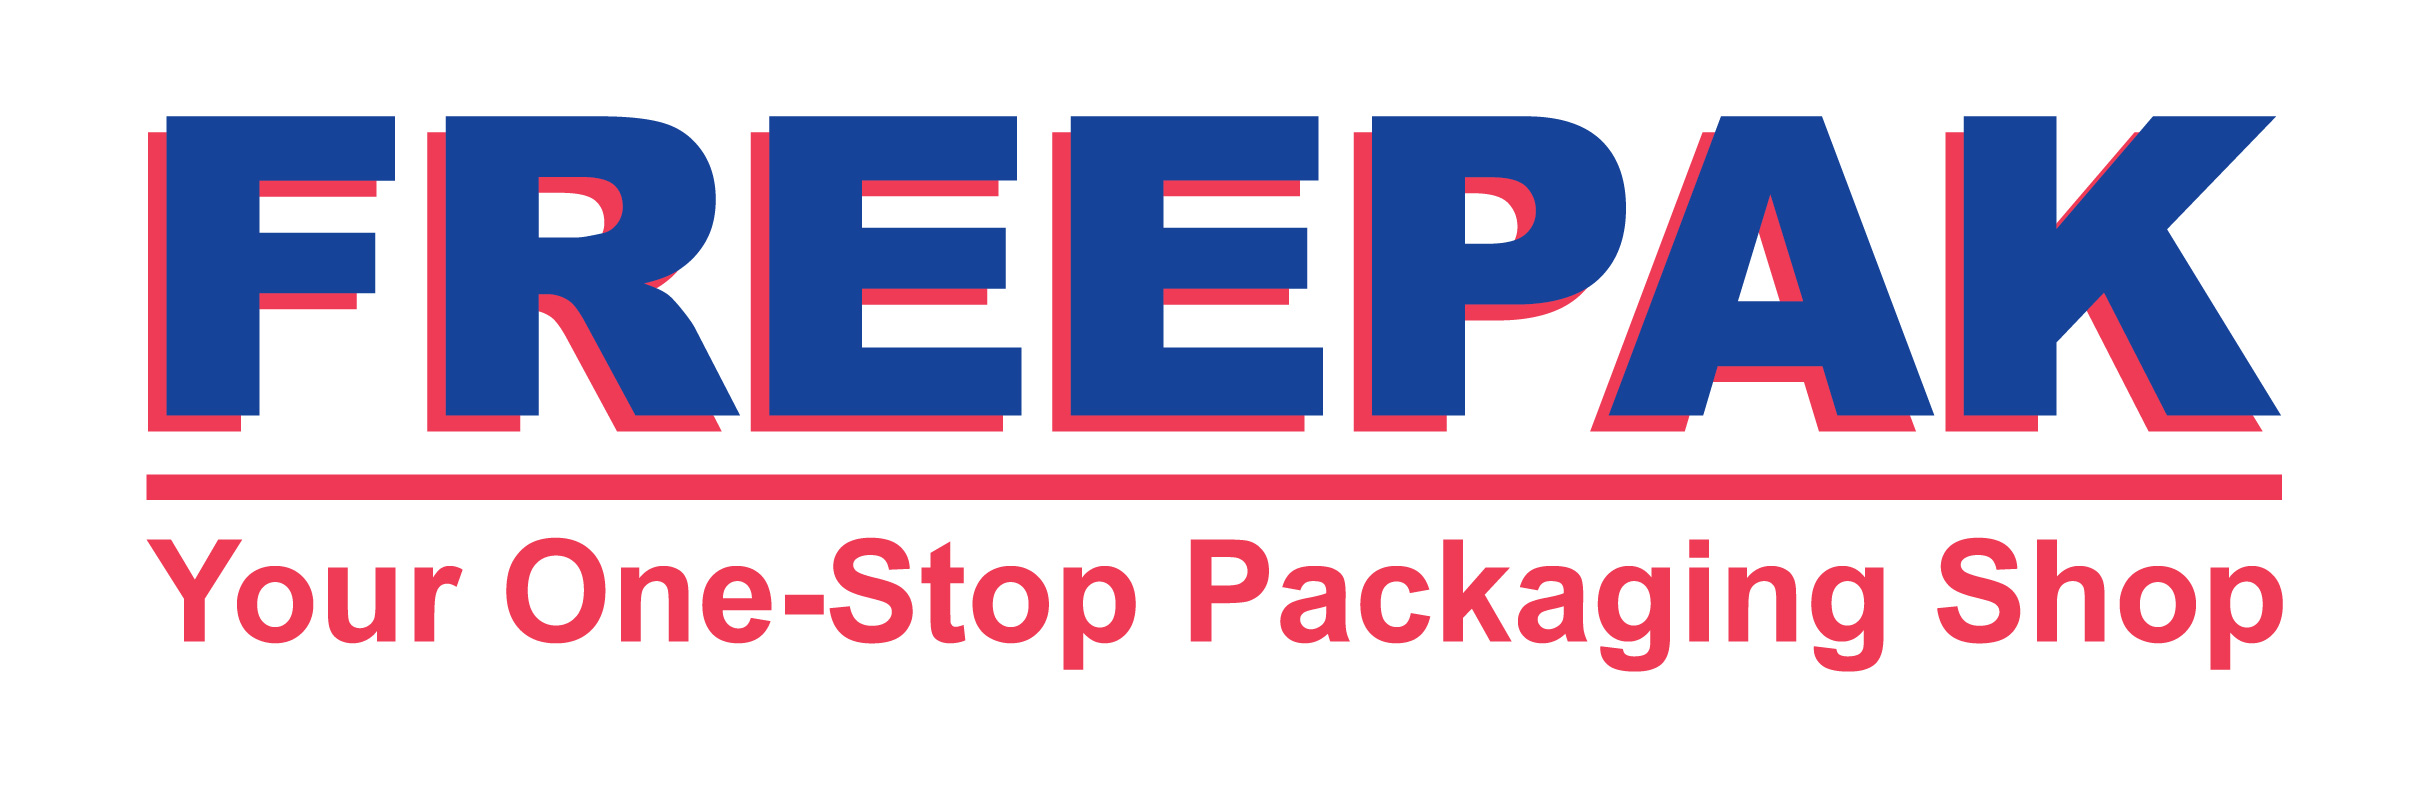 Freepak_logo-03